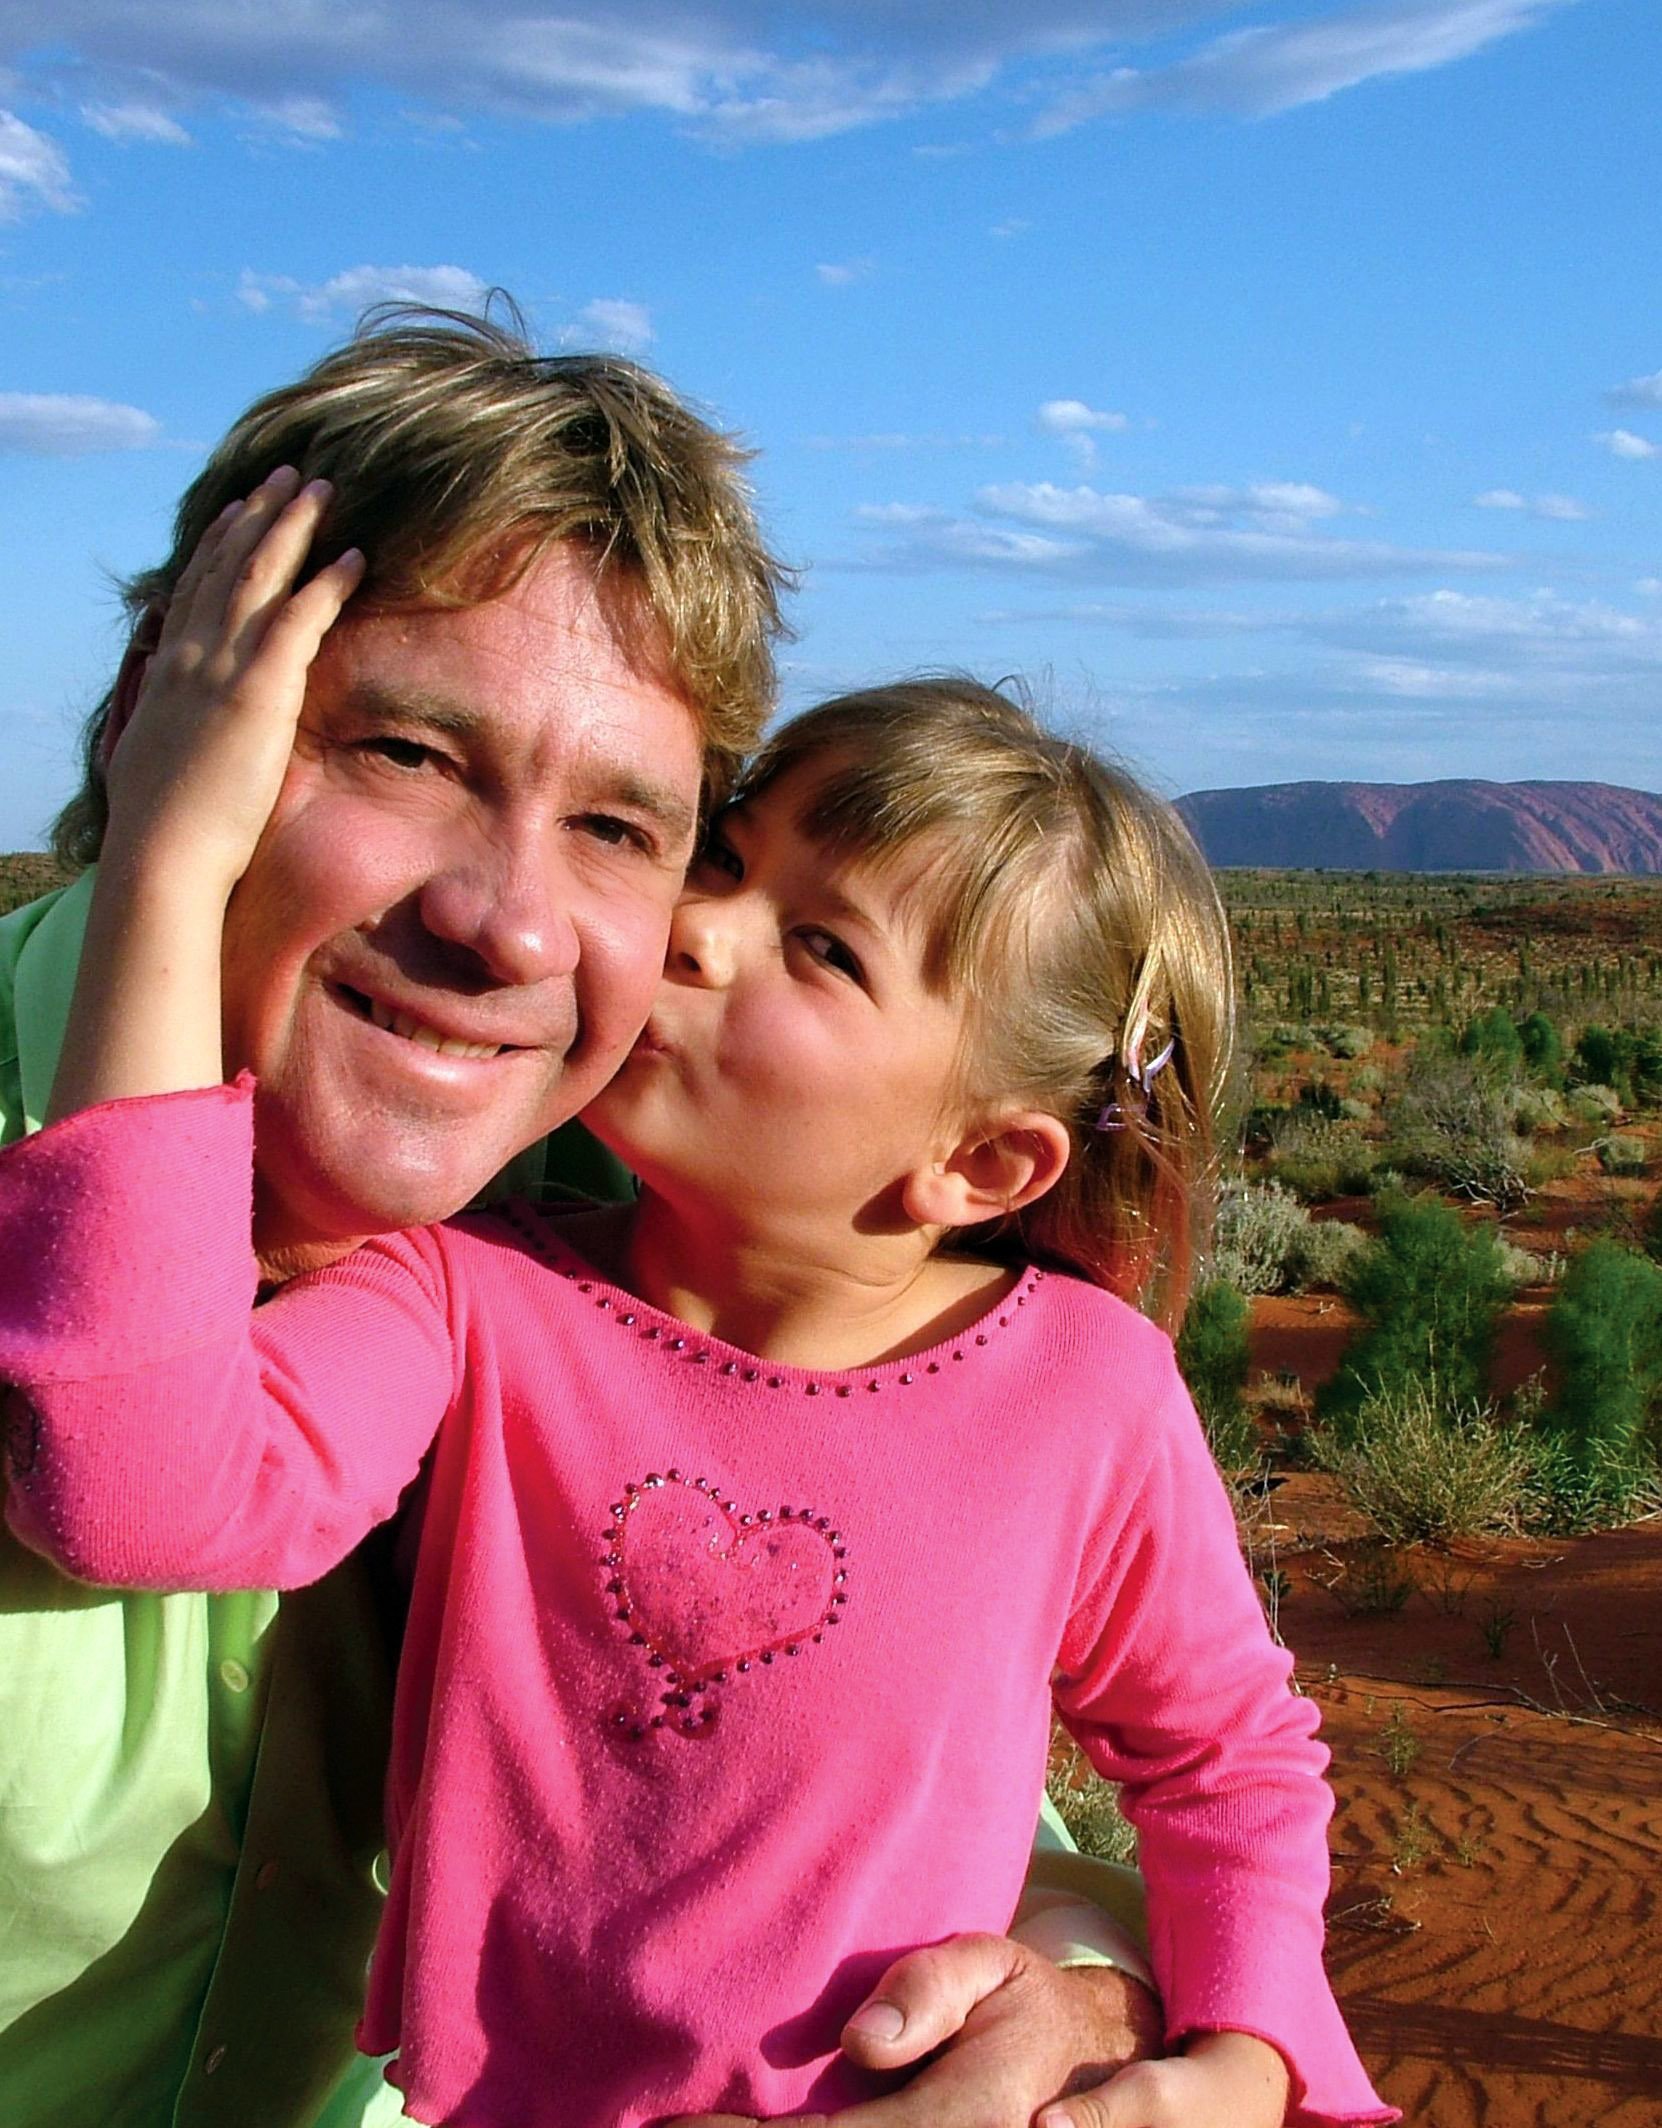 Steve Irwin poses with his daughter Bindi Irwin in Uluru, Australia | Source: Getty Images